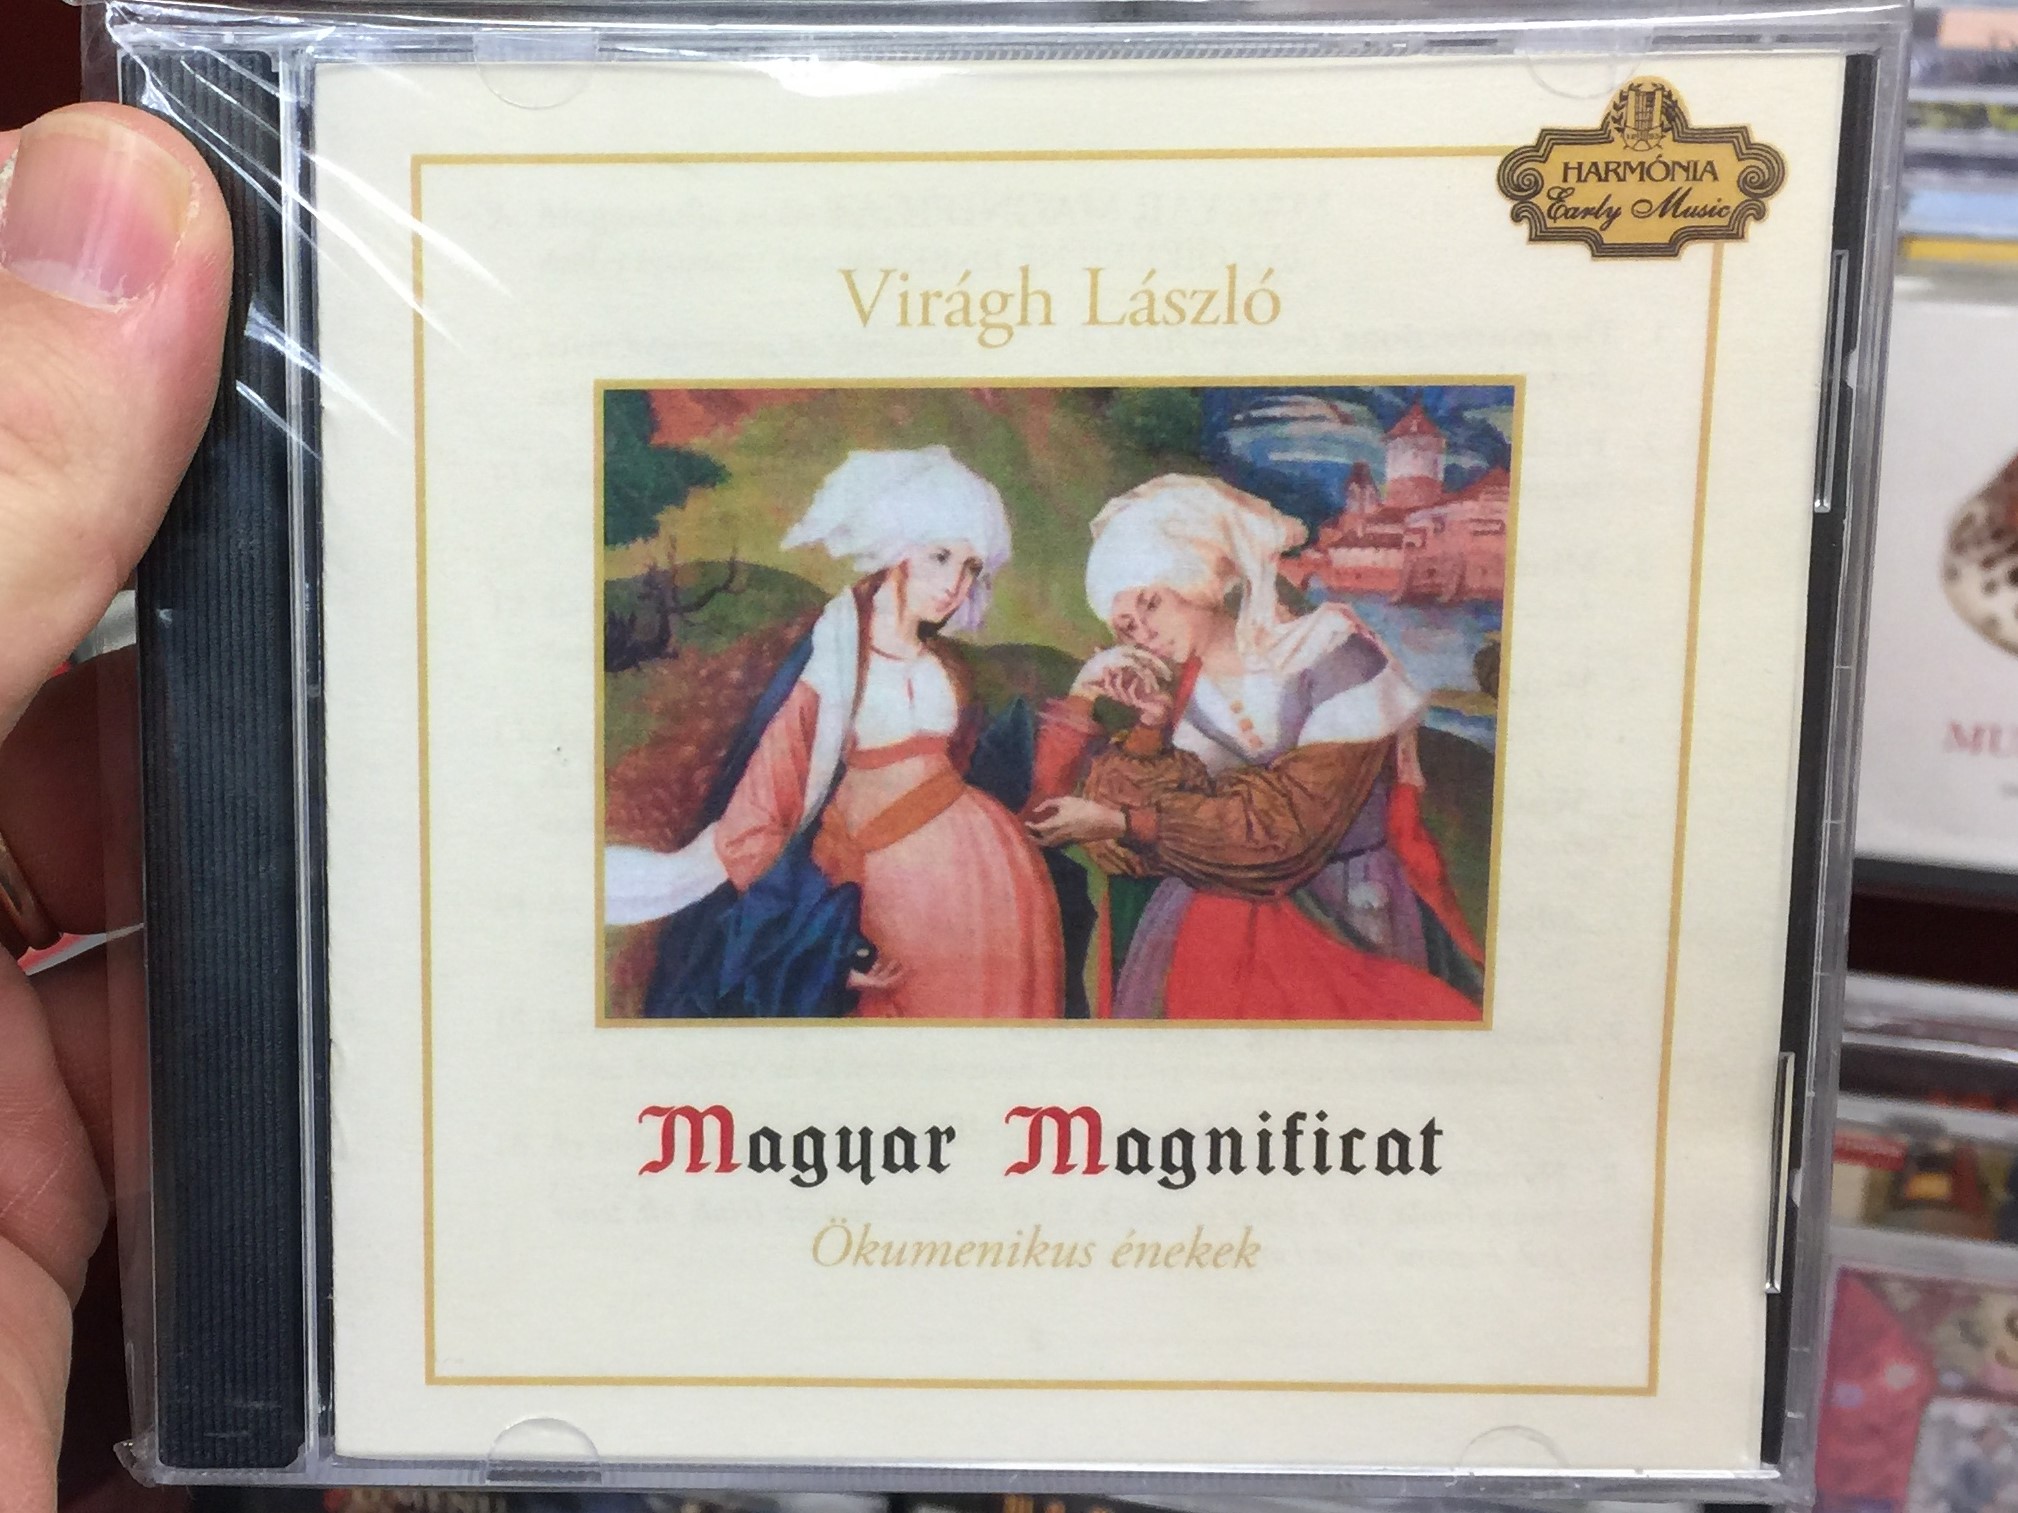 viragh-laszlo-magyar-magnicificat-okumenikus-enekek-harmonia-early-music-audio-cd-4260813326865-1-.jpg